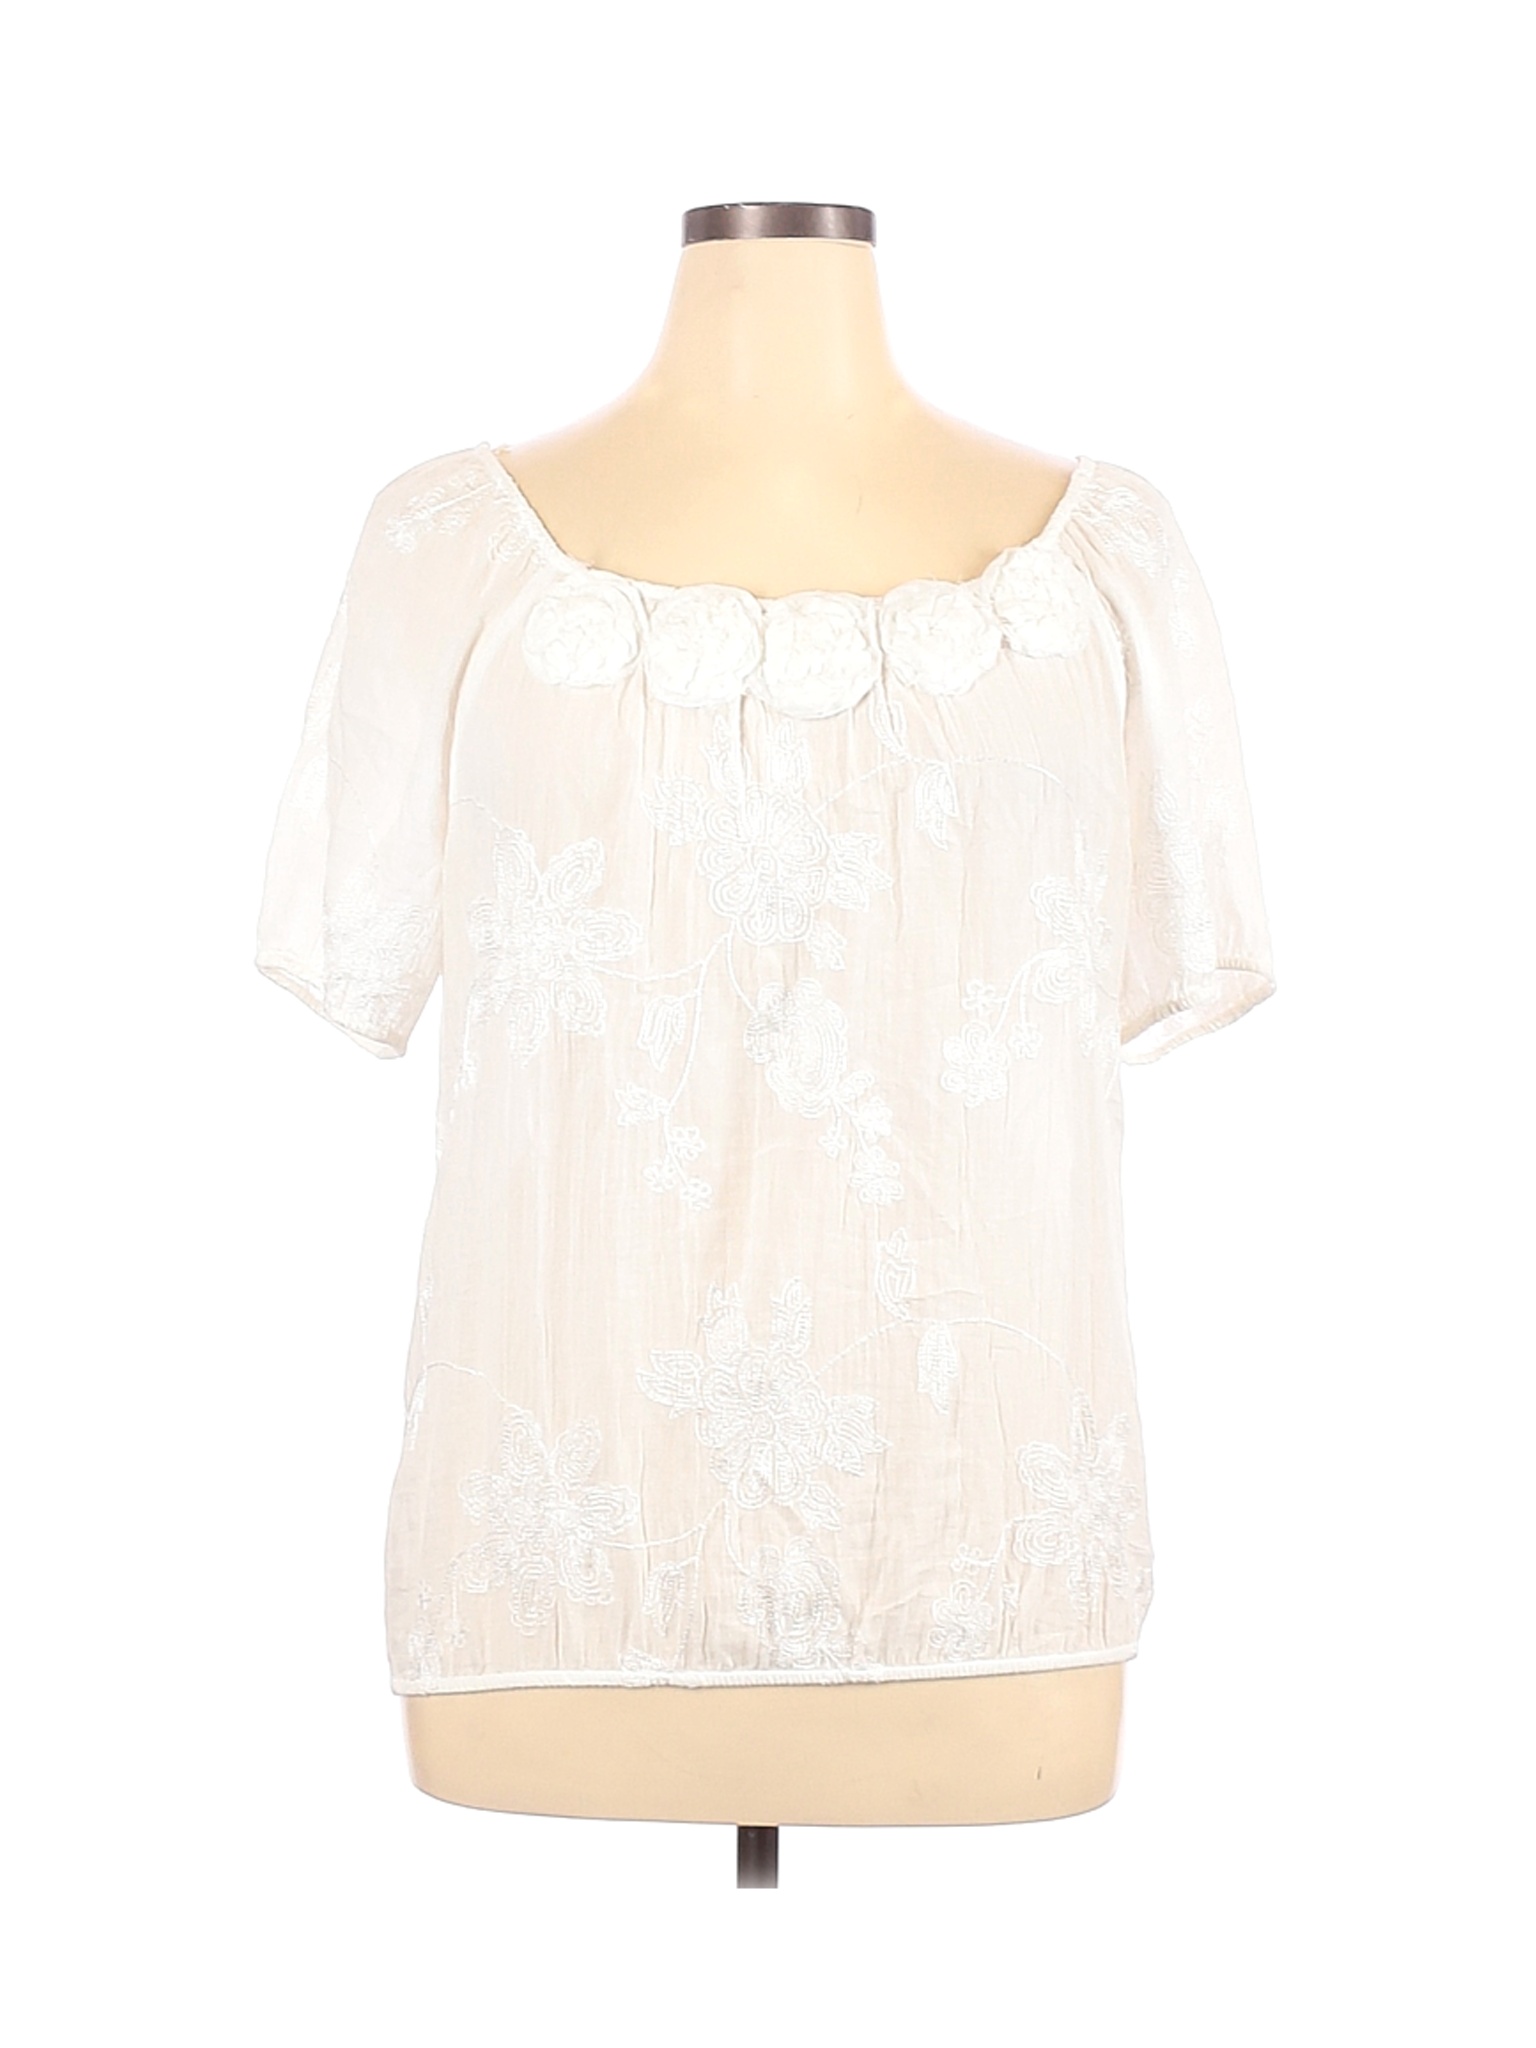 Karen Klein Women White Short Sleeve Blouse 1X Plus | eBay